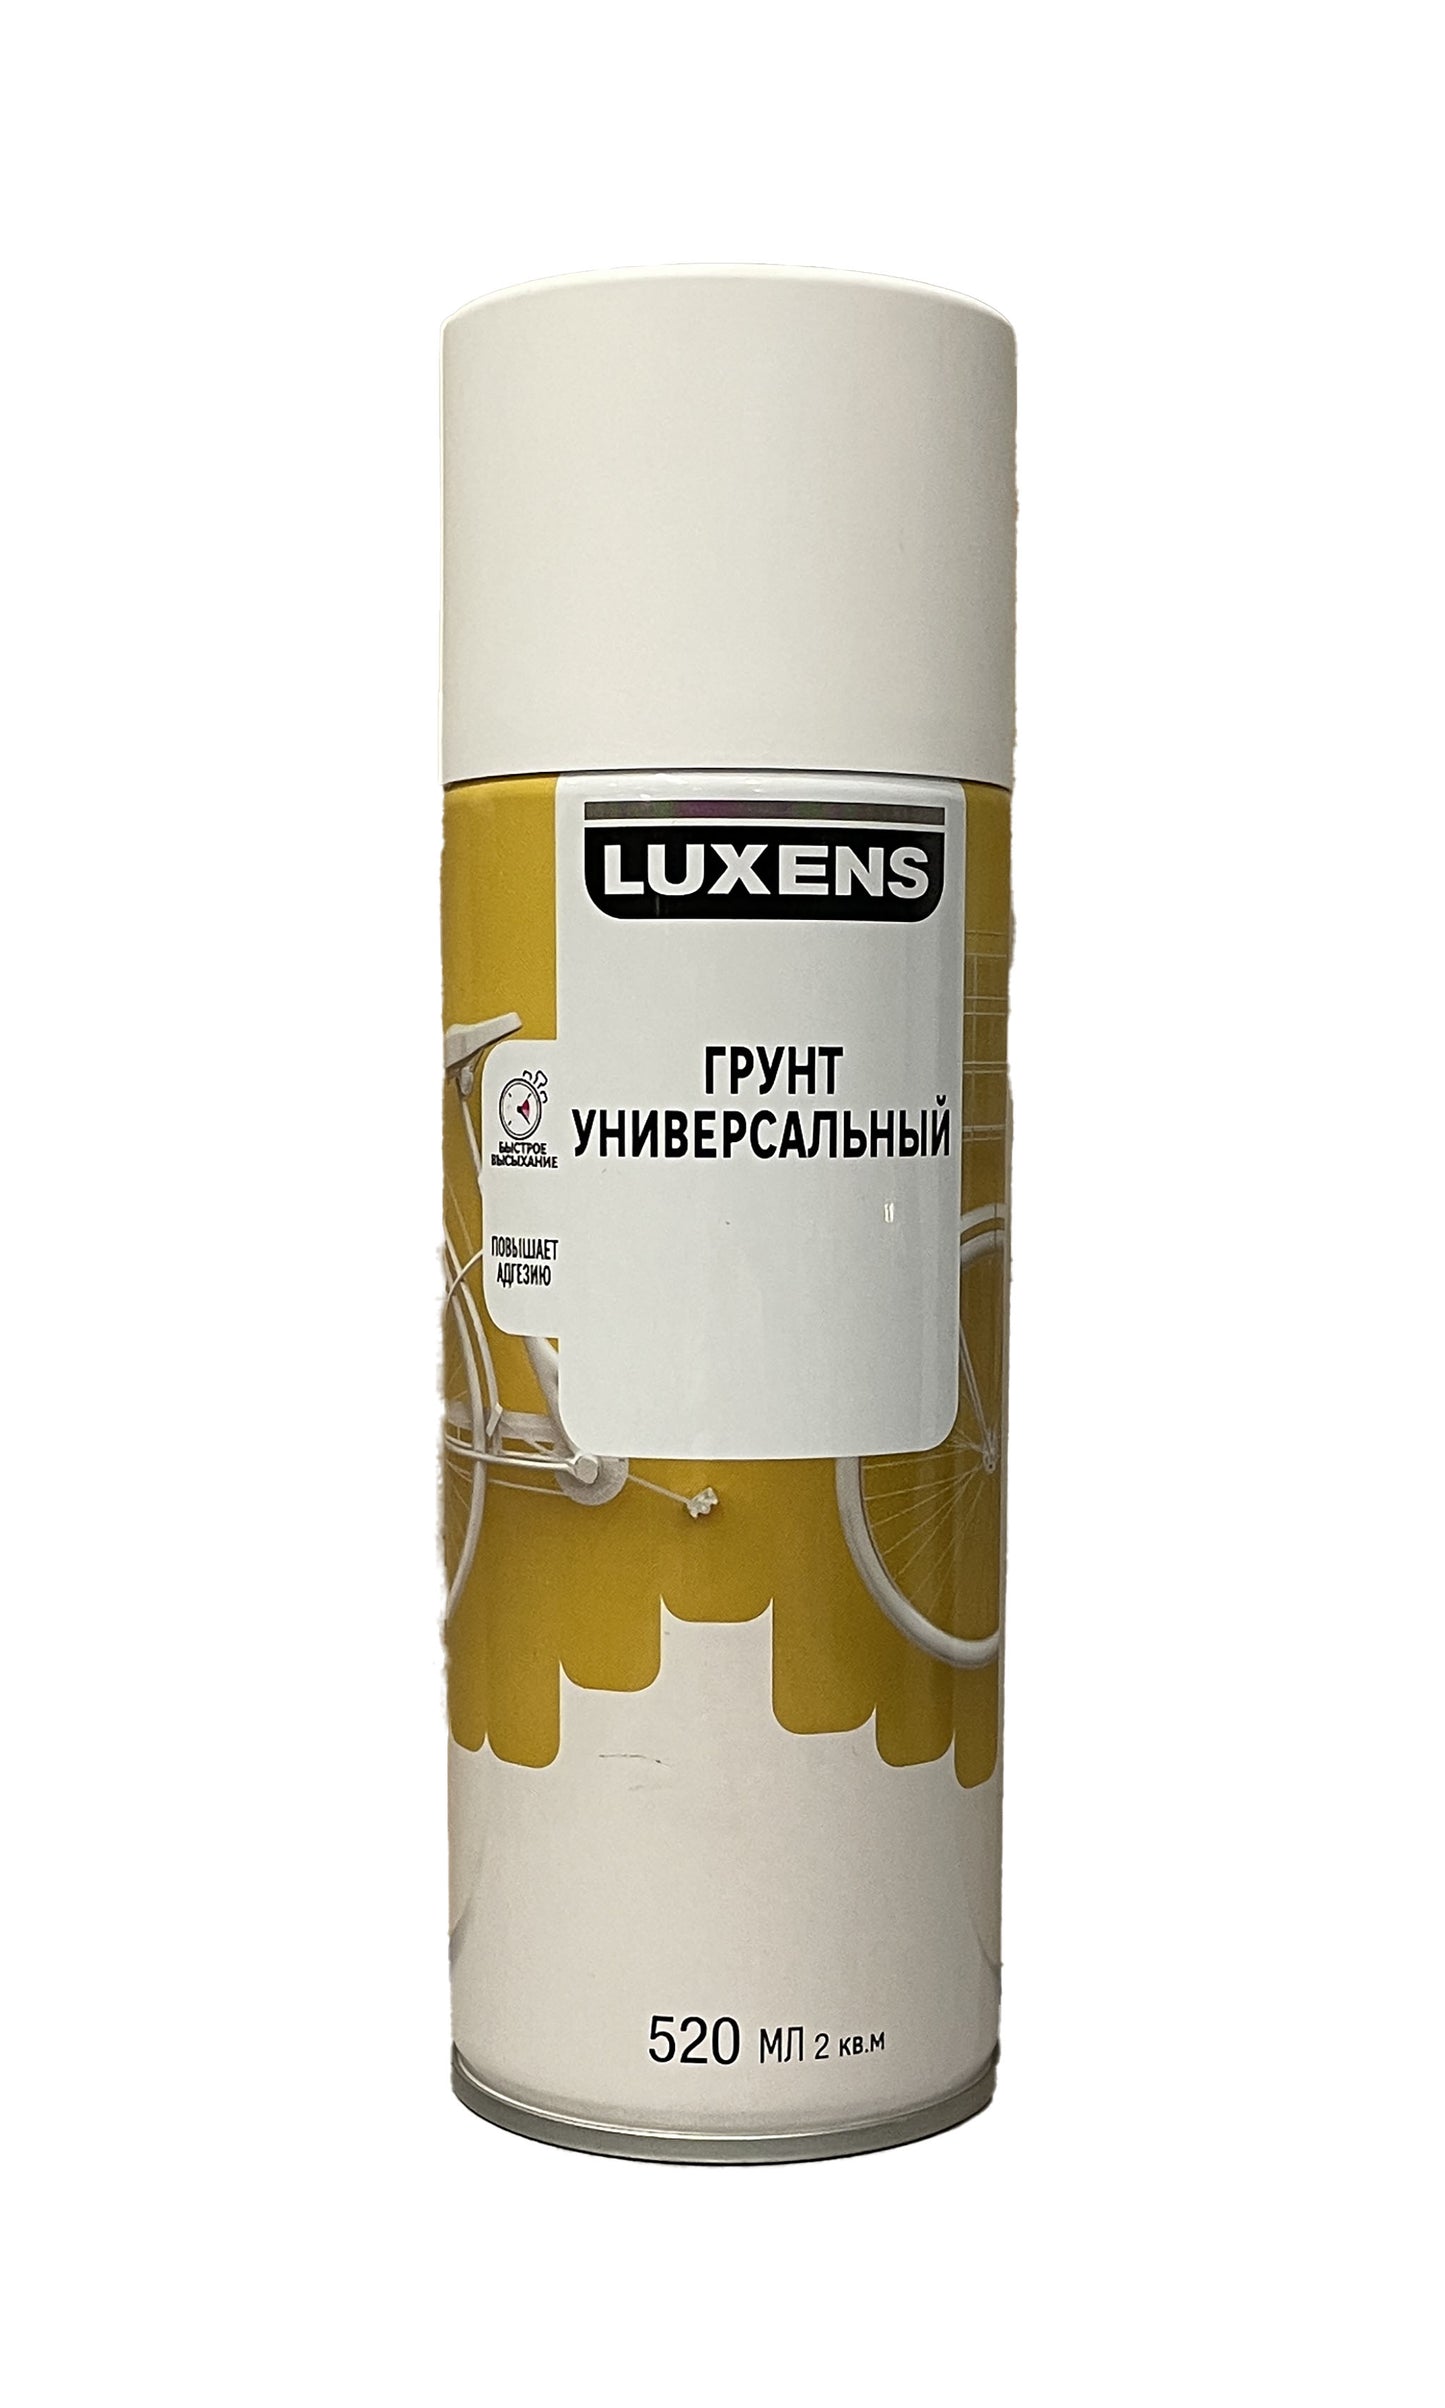 LUX-83237483-W-520 - аэрозольная грунтовка Luxens, цвет: белый, баллон: 520 мл.